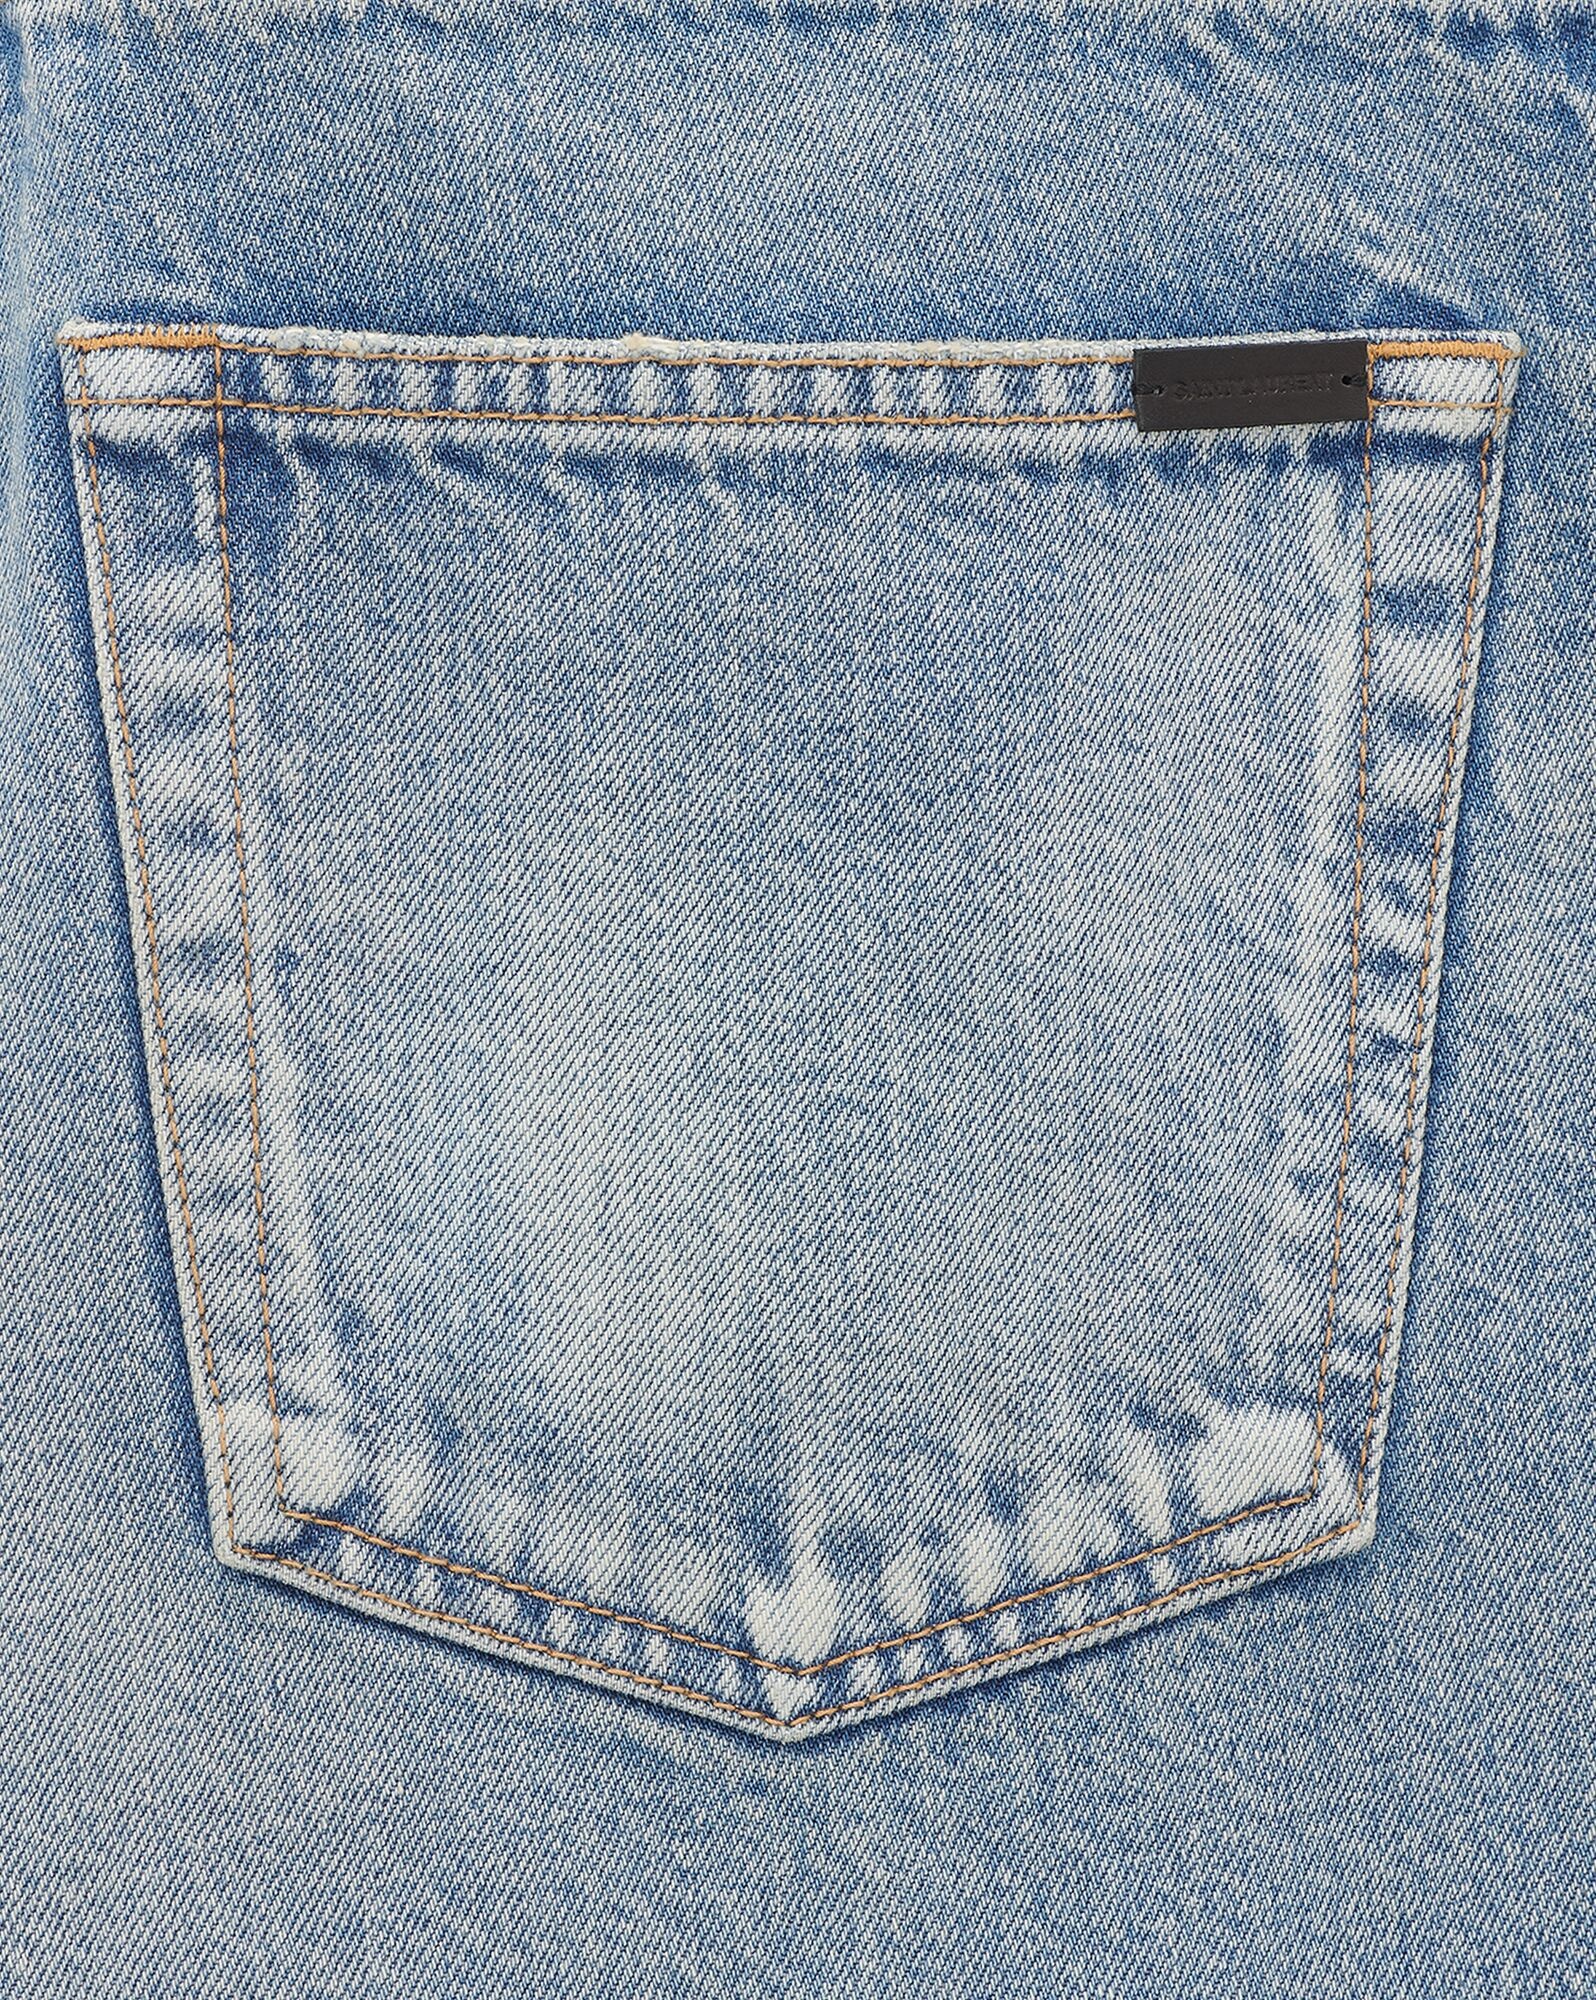 cropped jeans in sunny sky blue denim - 4